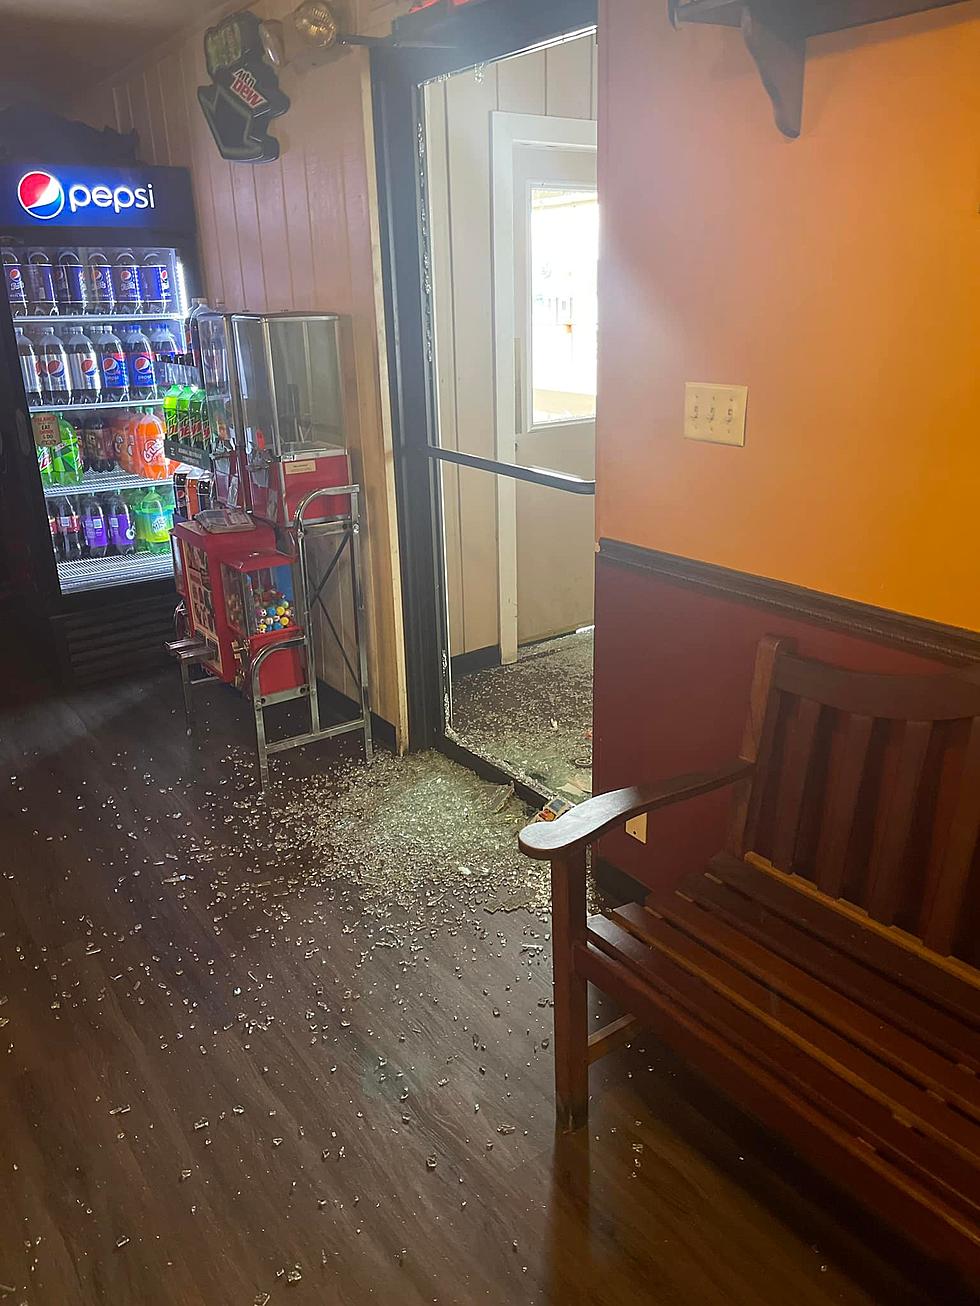 One Of Kimberly, ID Favorite Restaurants Was Broken Into